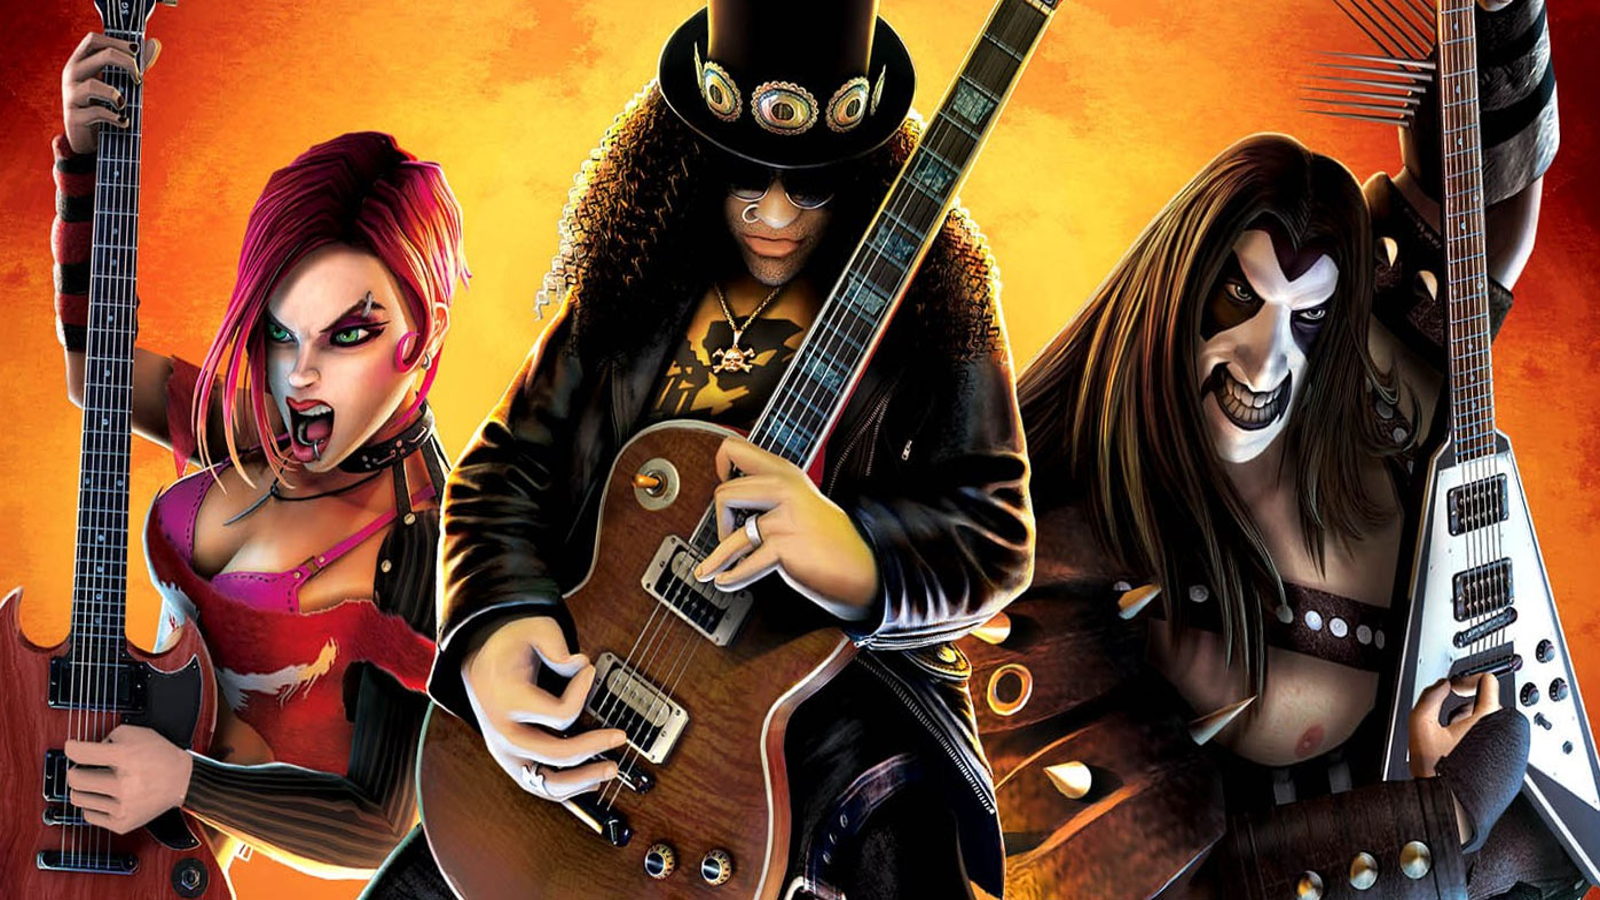 Guitar Hero 3 Vs. Rock Band 3 - Through The Fire And Flames - Guitar -  Expert 